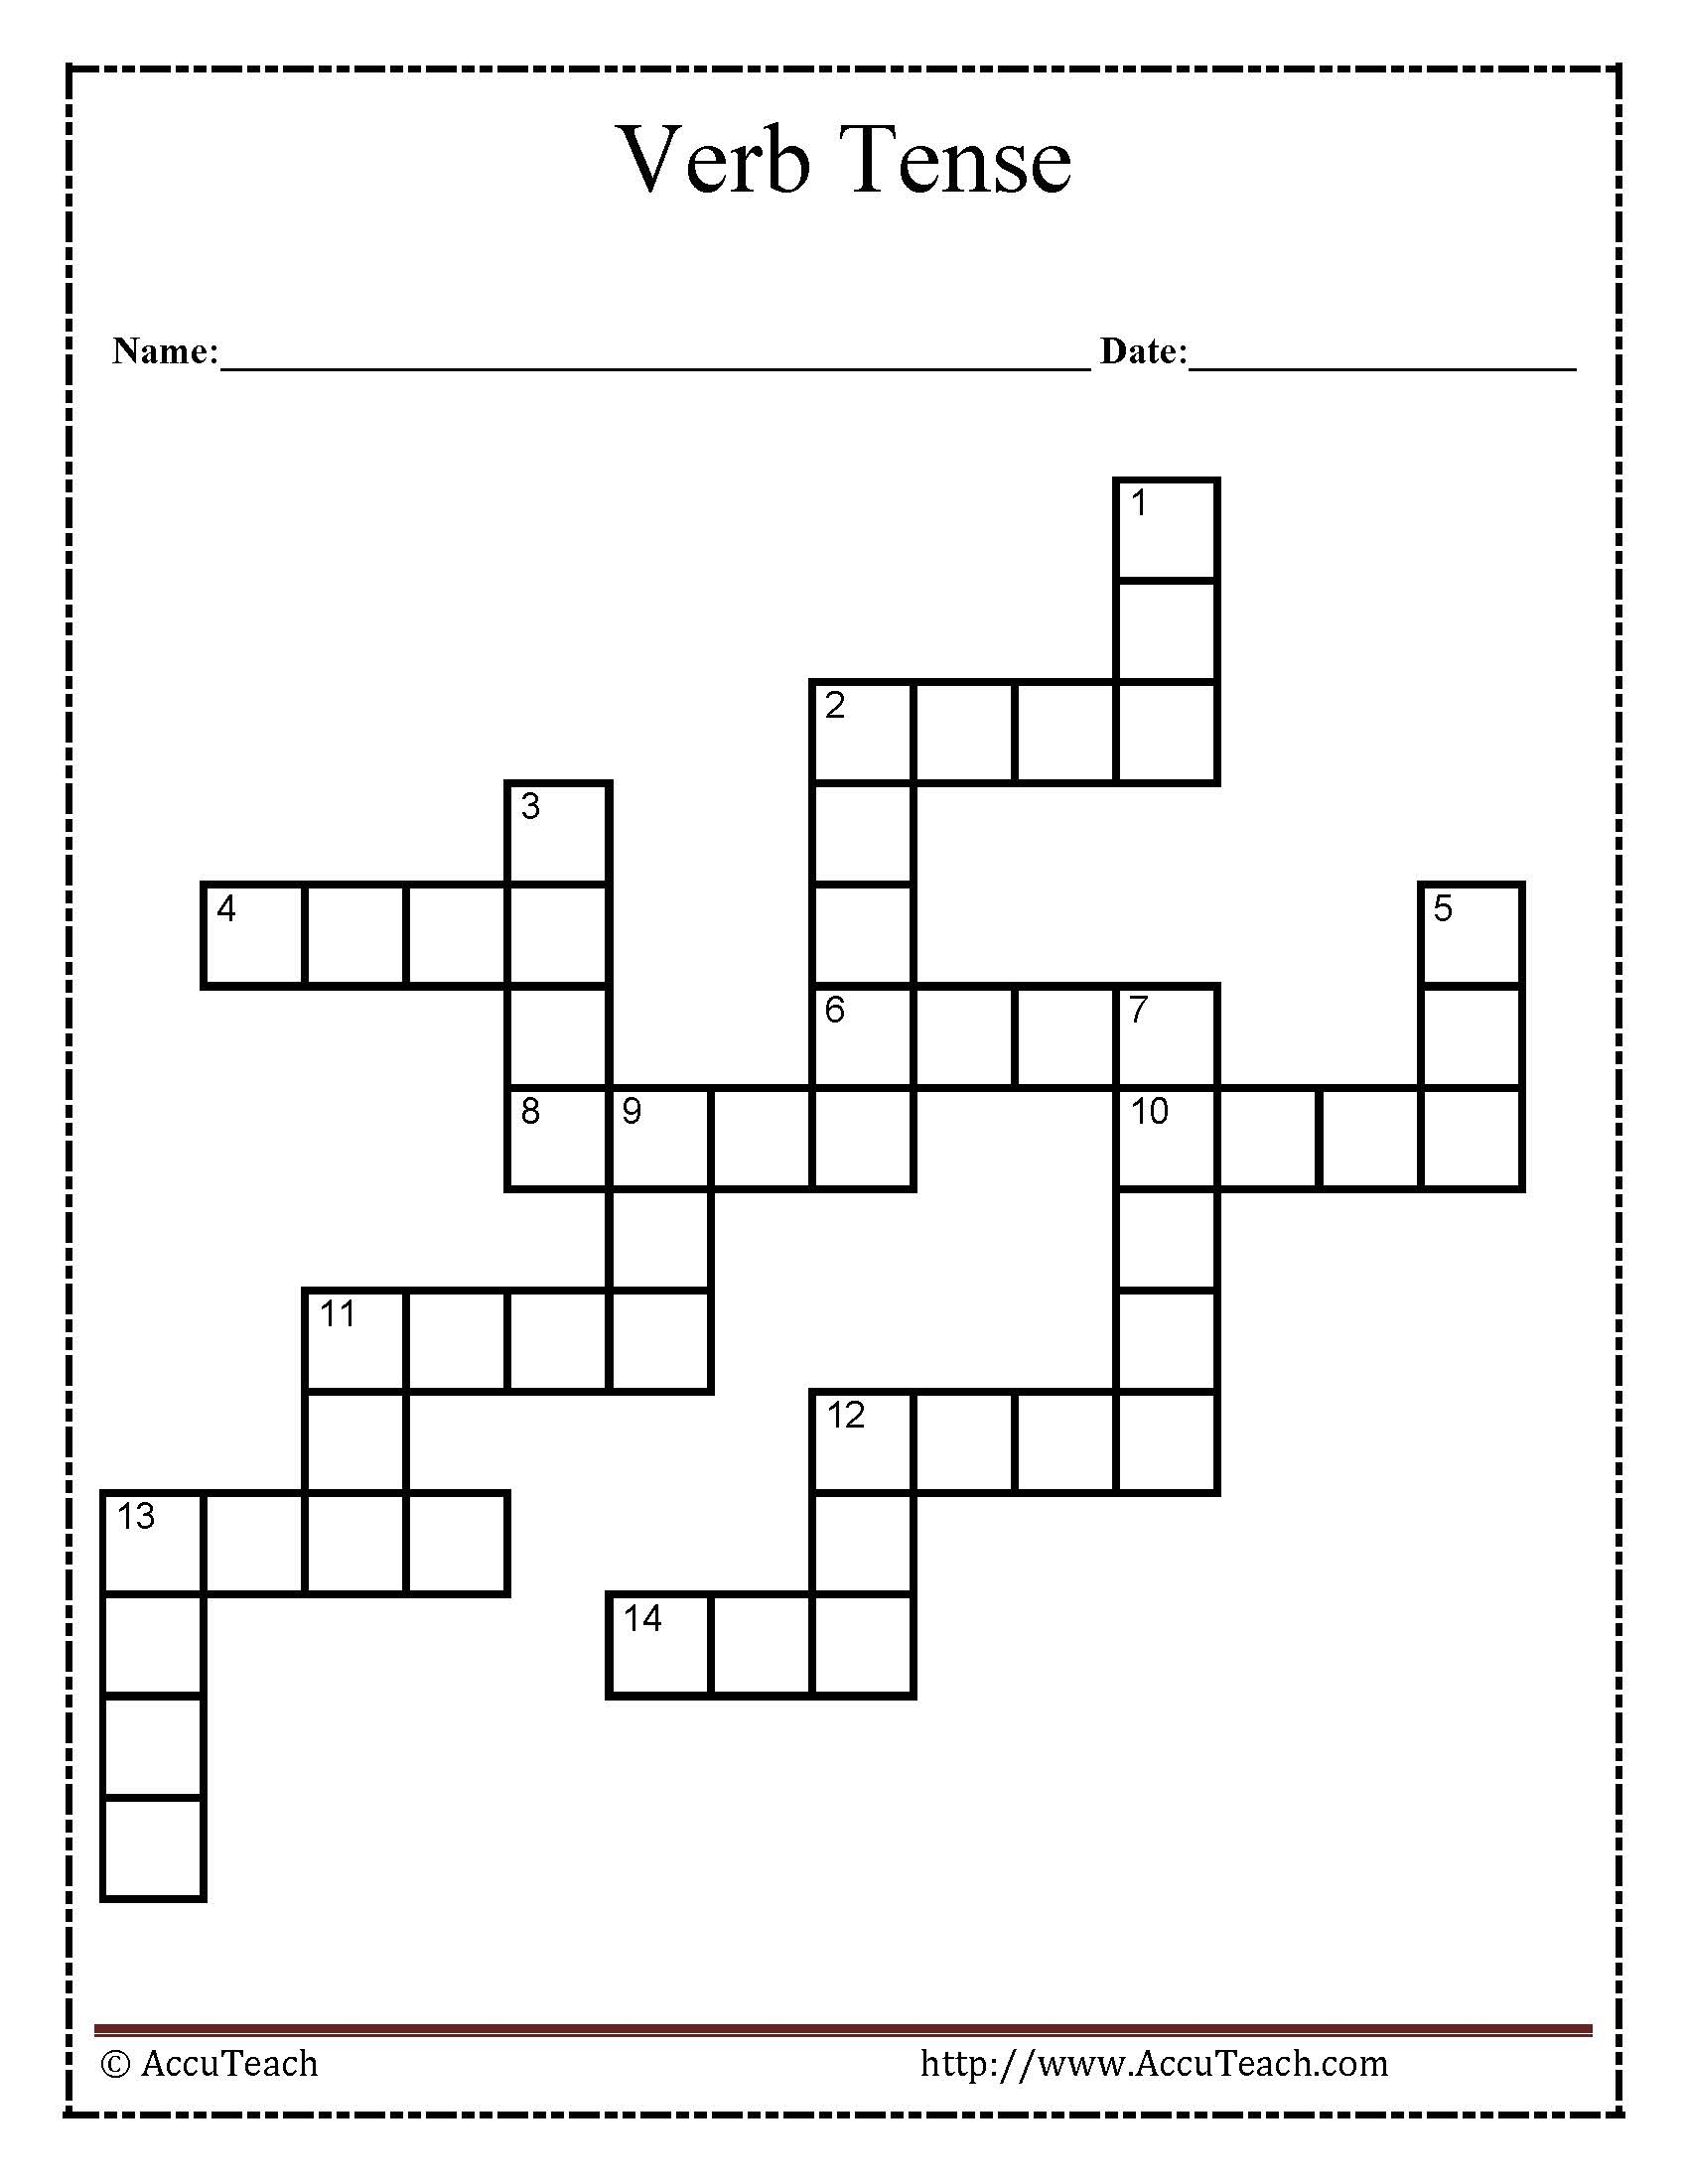 Verb Tense Crossword Puzzle Worksheet - Printable Crossword Puzzles 5Th Grade